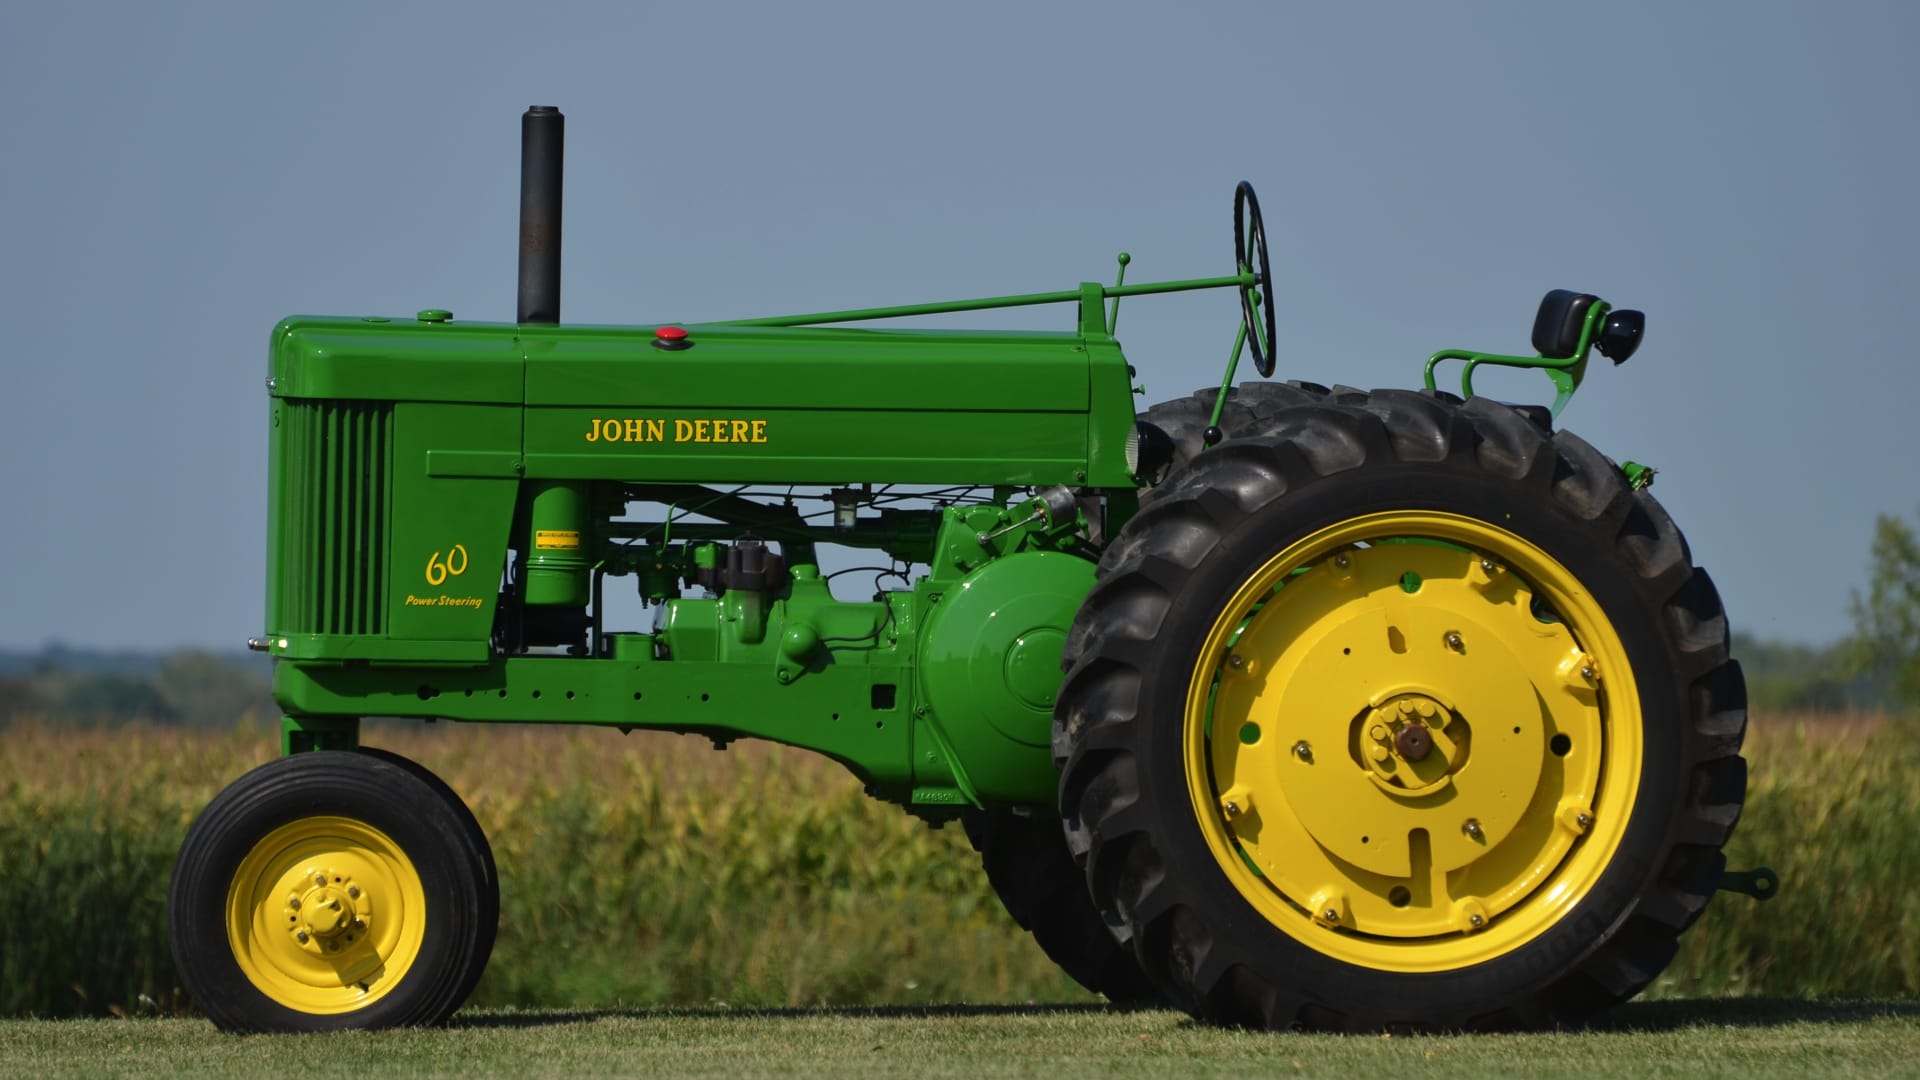 1956 John Deere 60 At Gone Farmin Iowa 2012 As S60 Mecum Auctions 0599